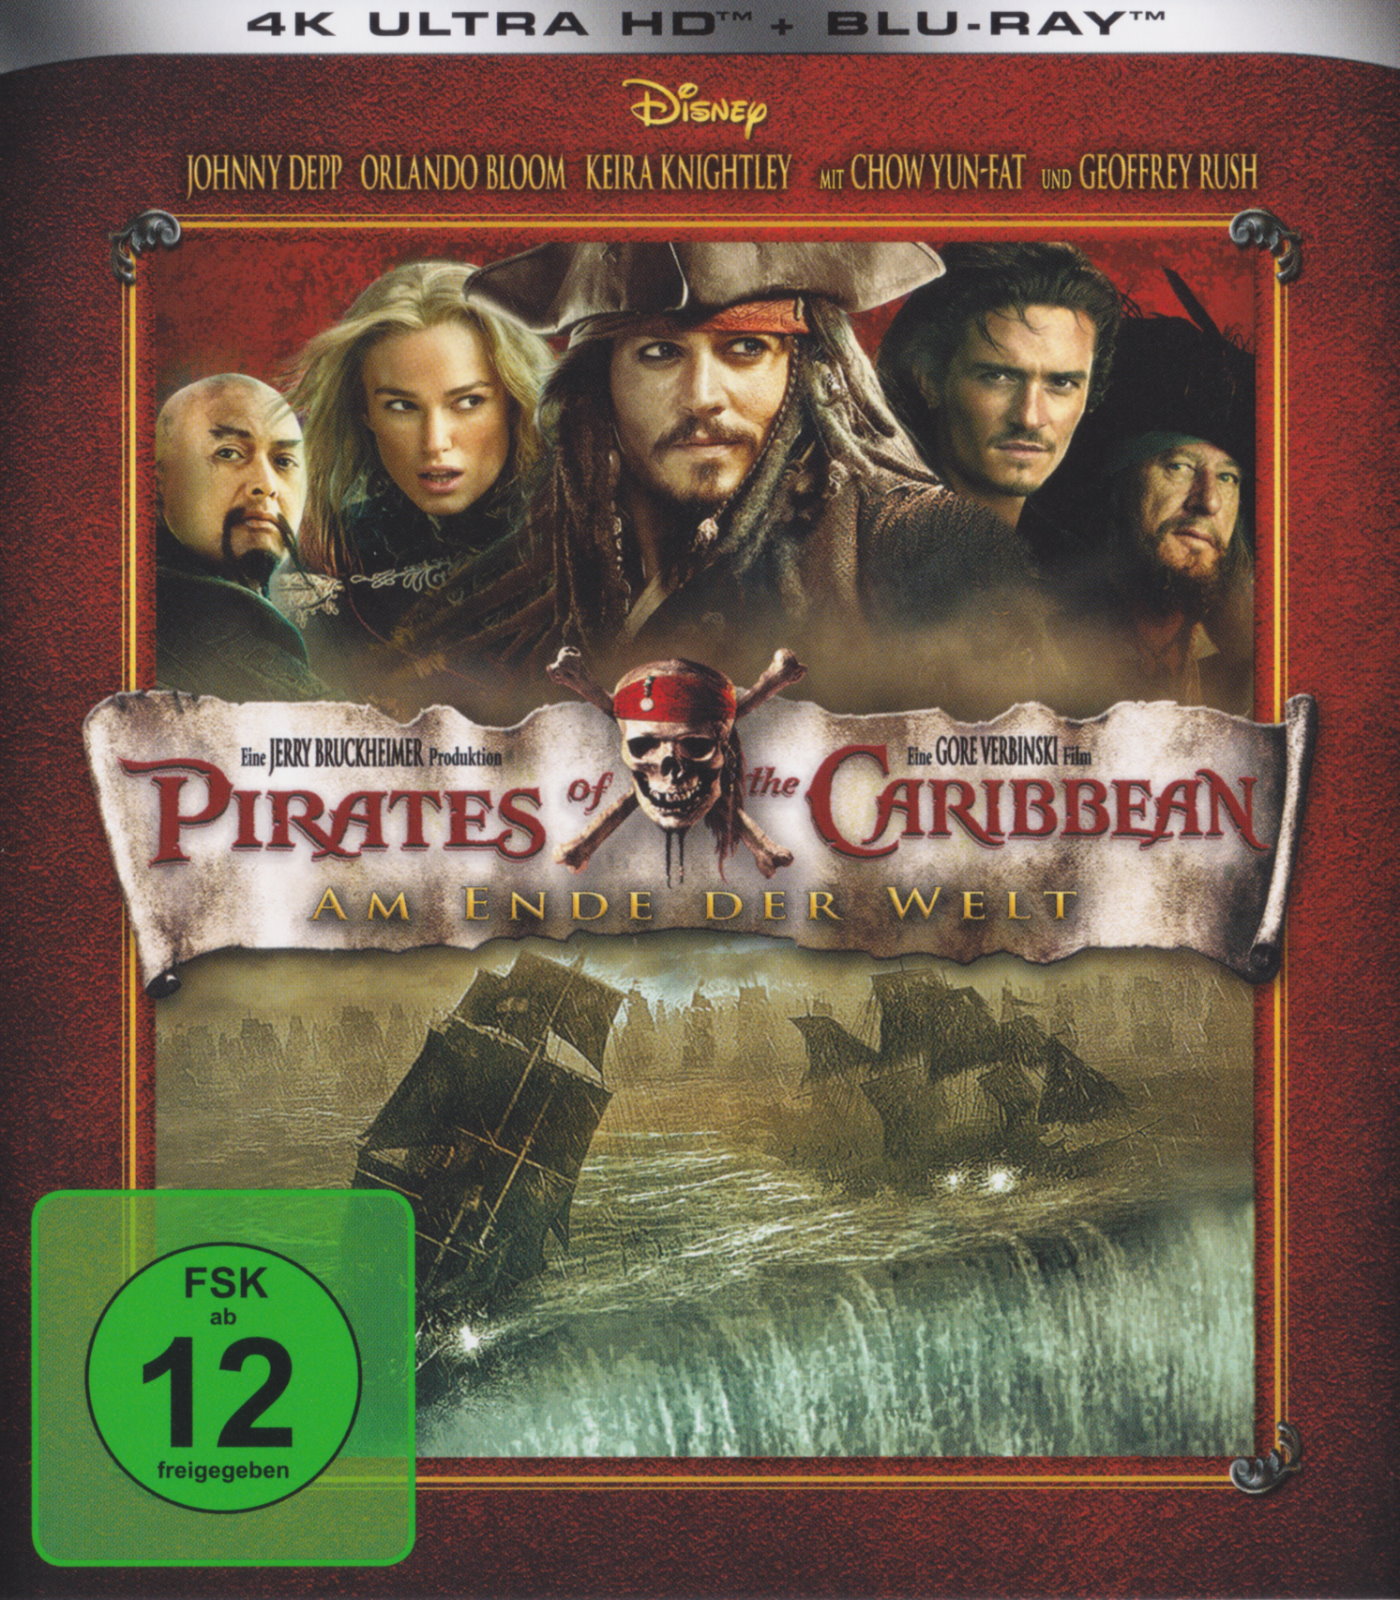 Cover - Pirates of the Caribbean - Am Ende der Welt.jpg